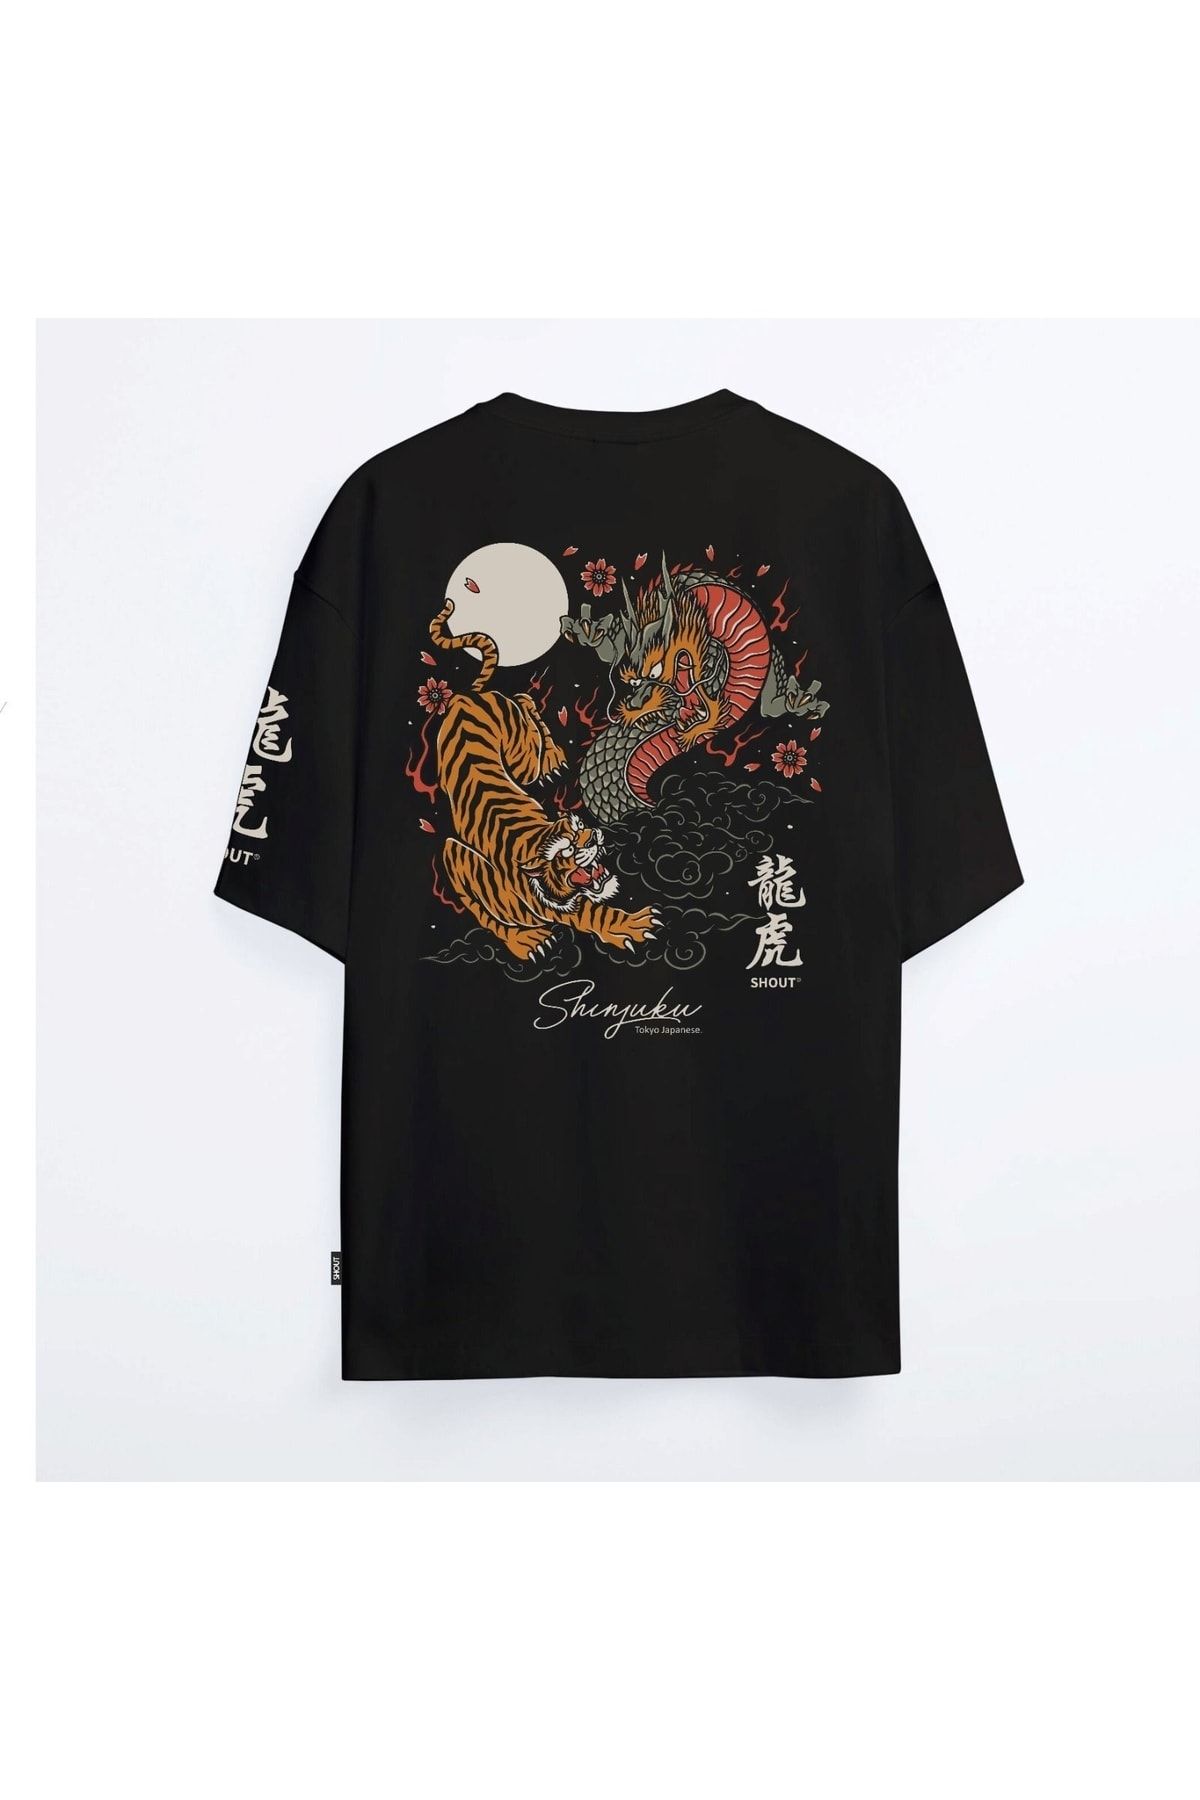 Shout Oversize Tokyo Shinjuku Tiger Vs Dragon Unisex T-shirt